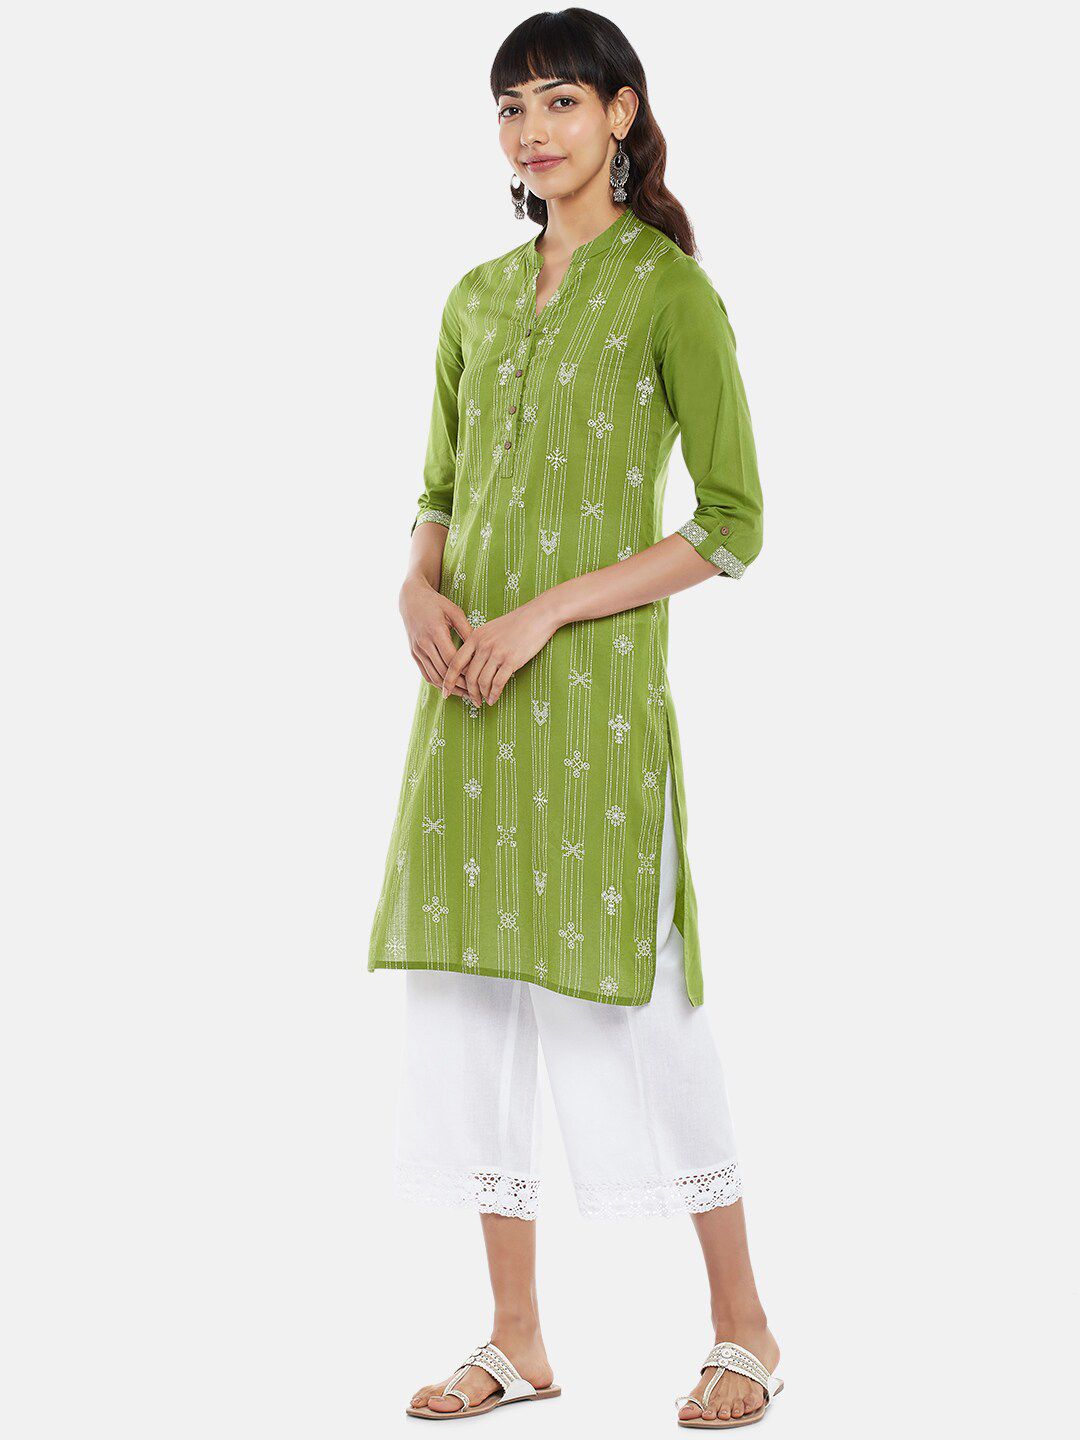 RANGMANCH BY PANTALOONS Women Green Ethnic Motifs Embroidered Kurta Price in India